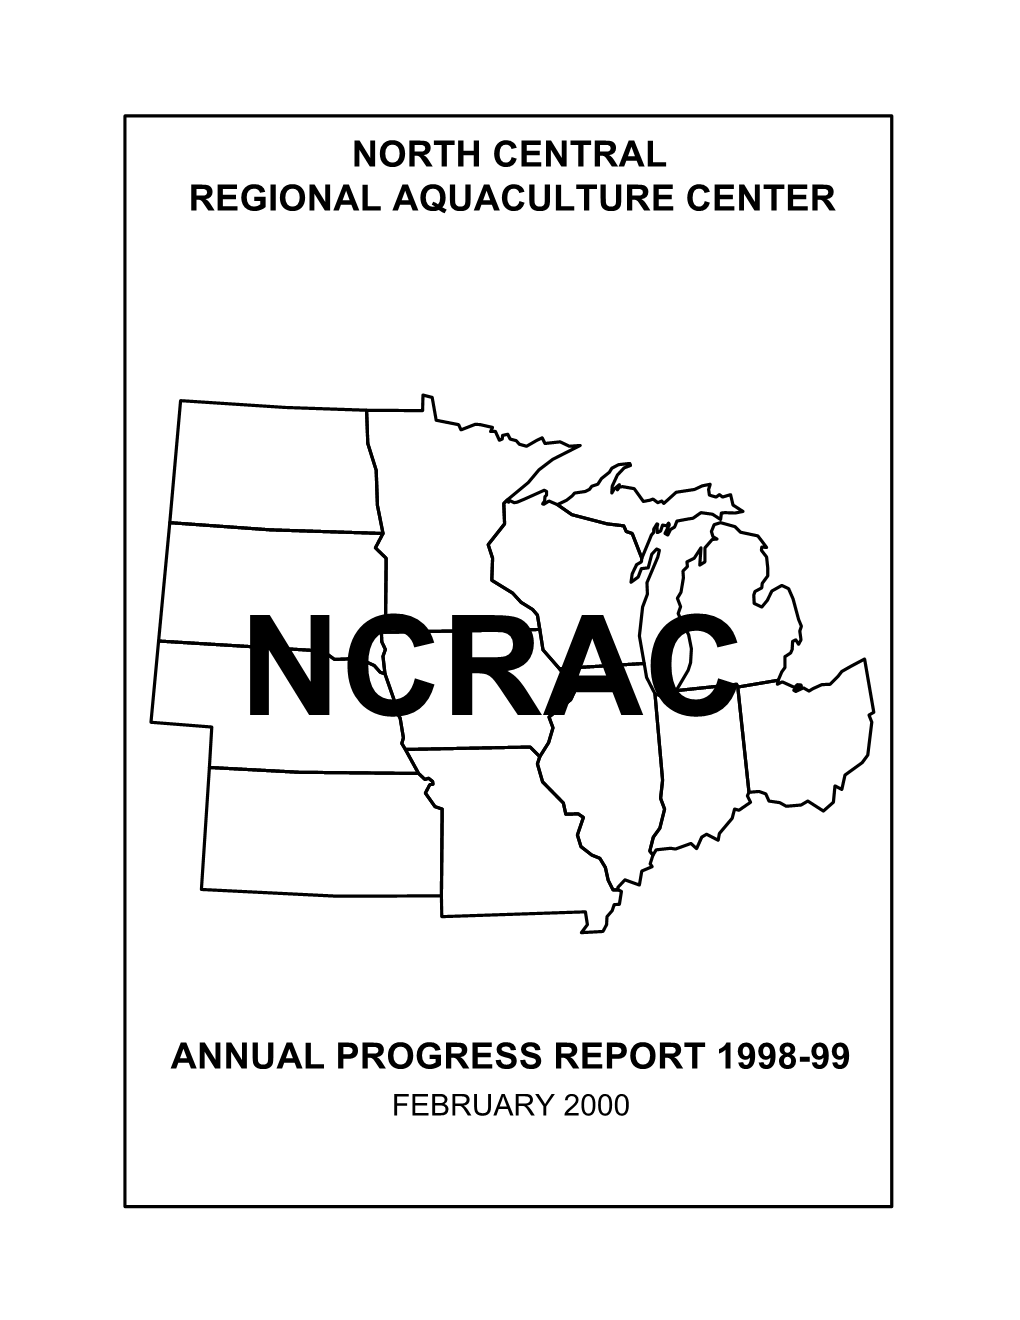 North Central Regional Aquaculture Center